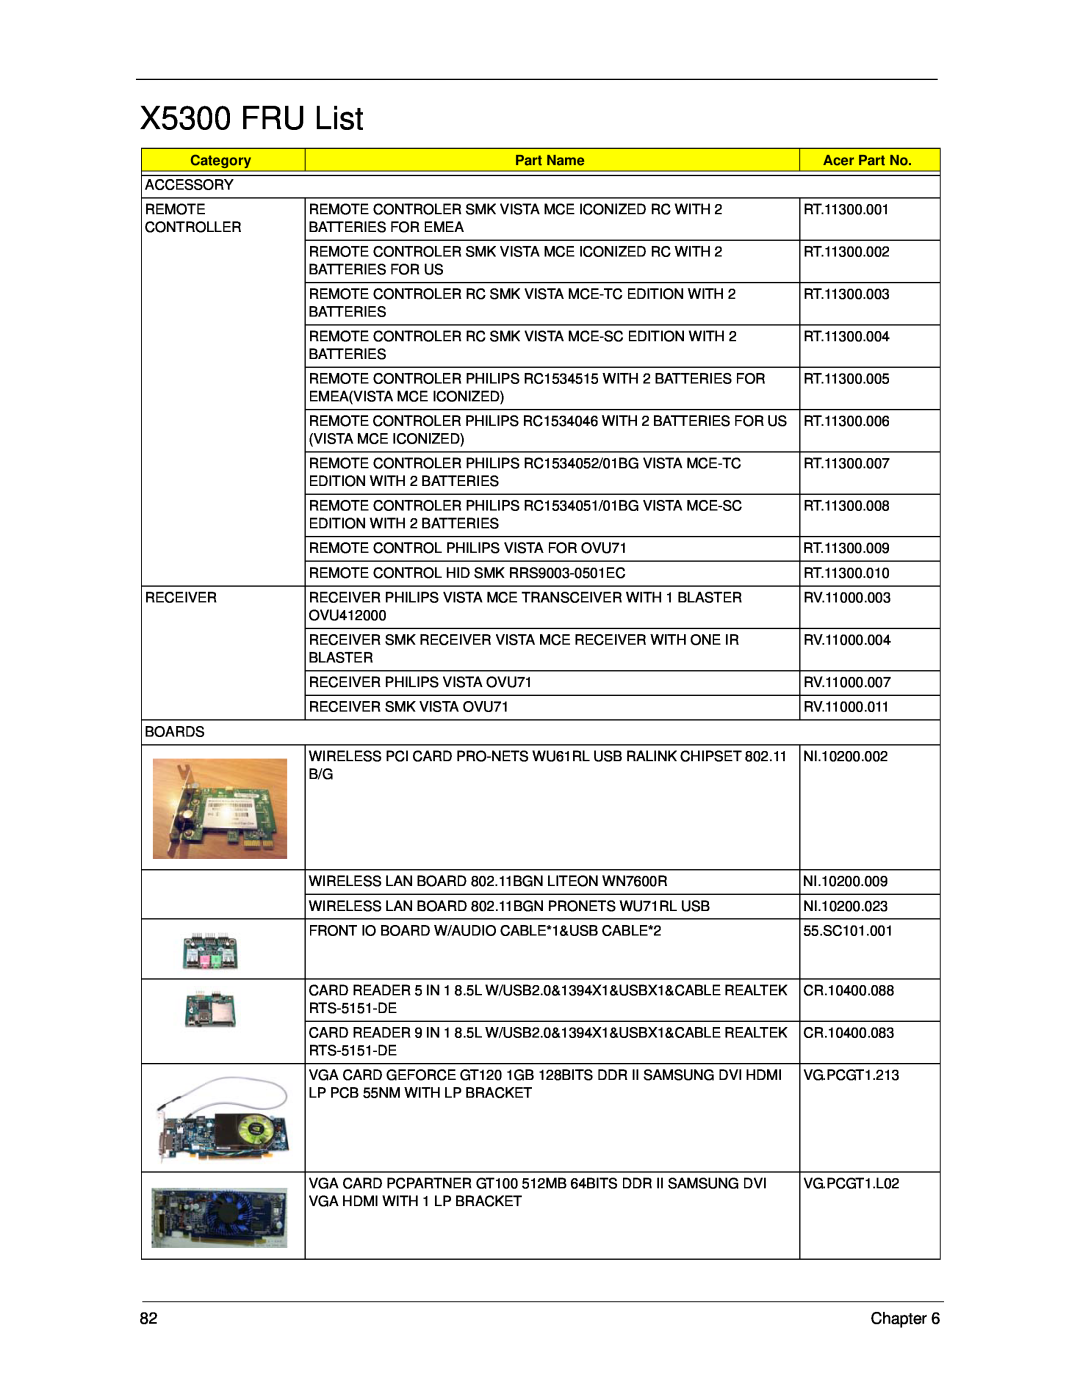 Acer X3300 manual X5300 FRU List, Category, Part Name, Acer Part No 